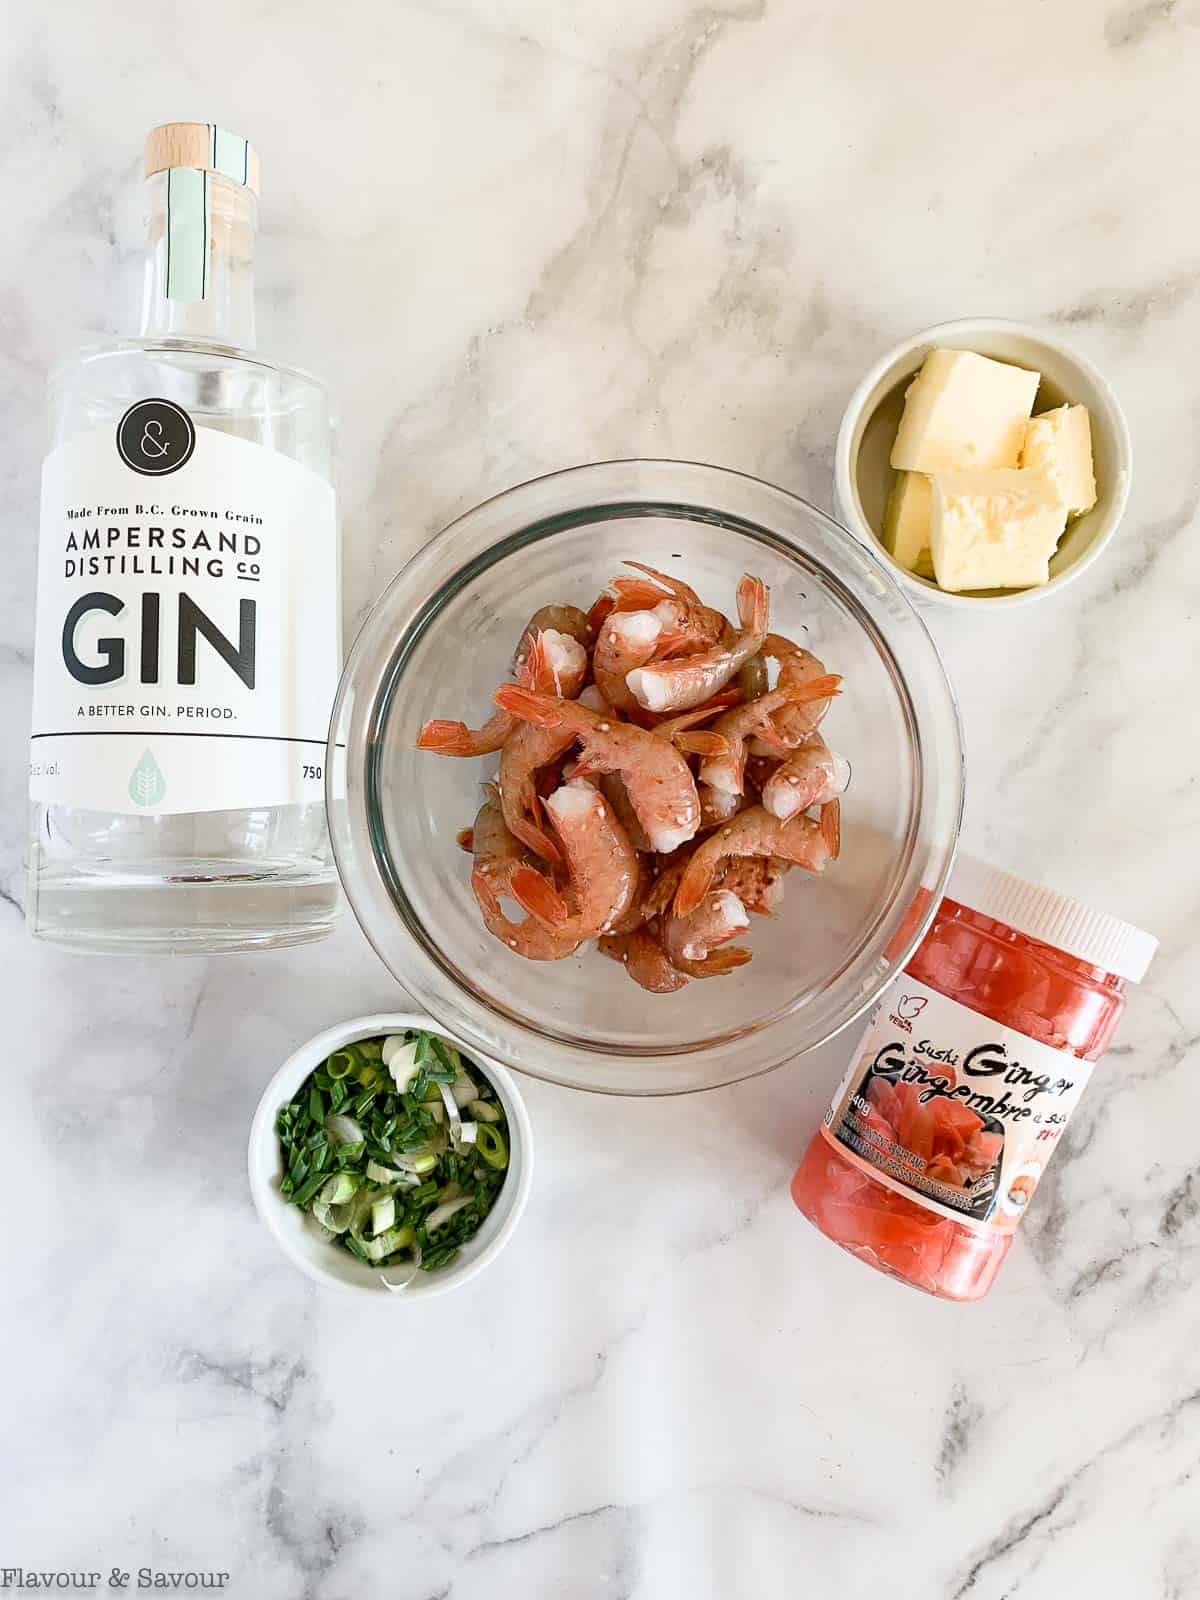 Ingredients for Gin-Gingered Prawns